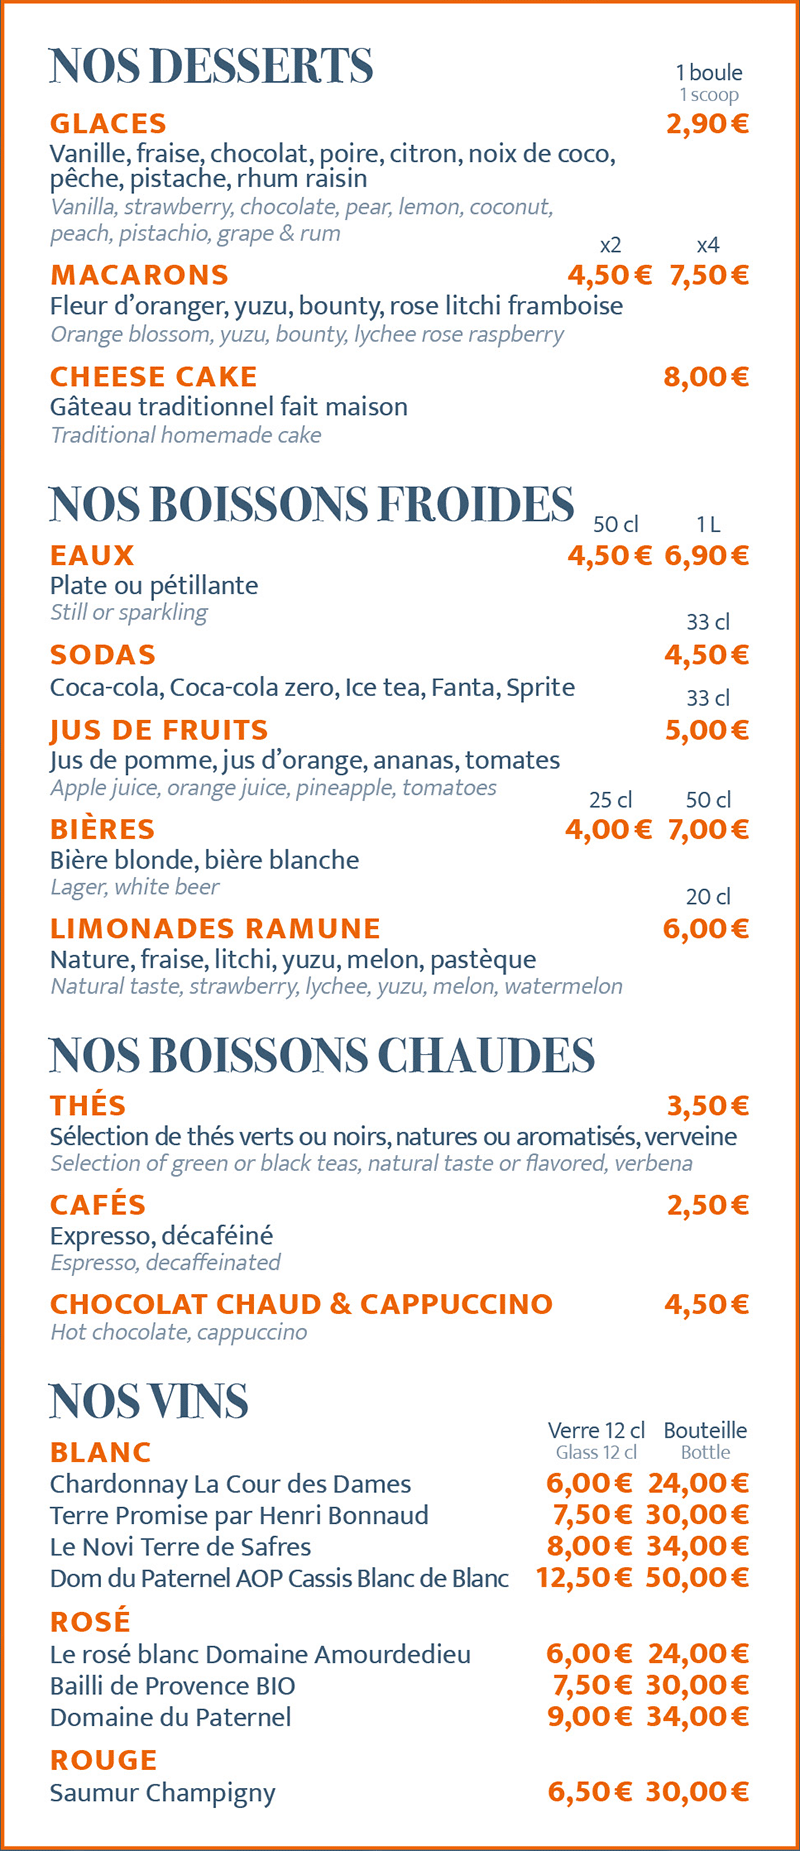 Desserts - Boissons - Vins